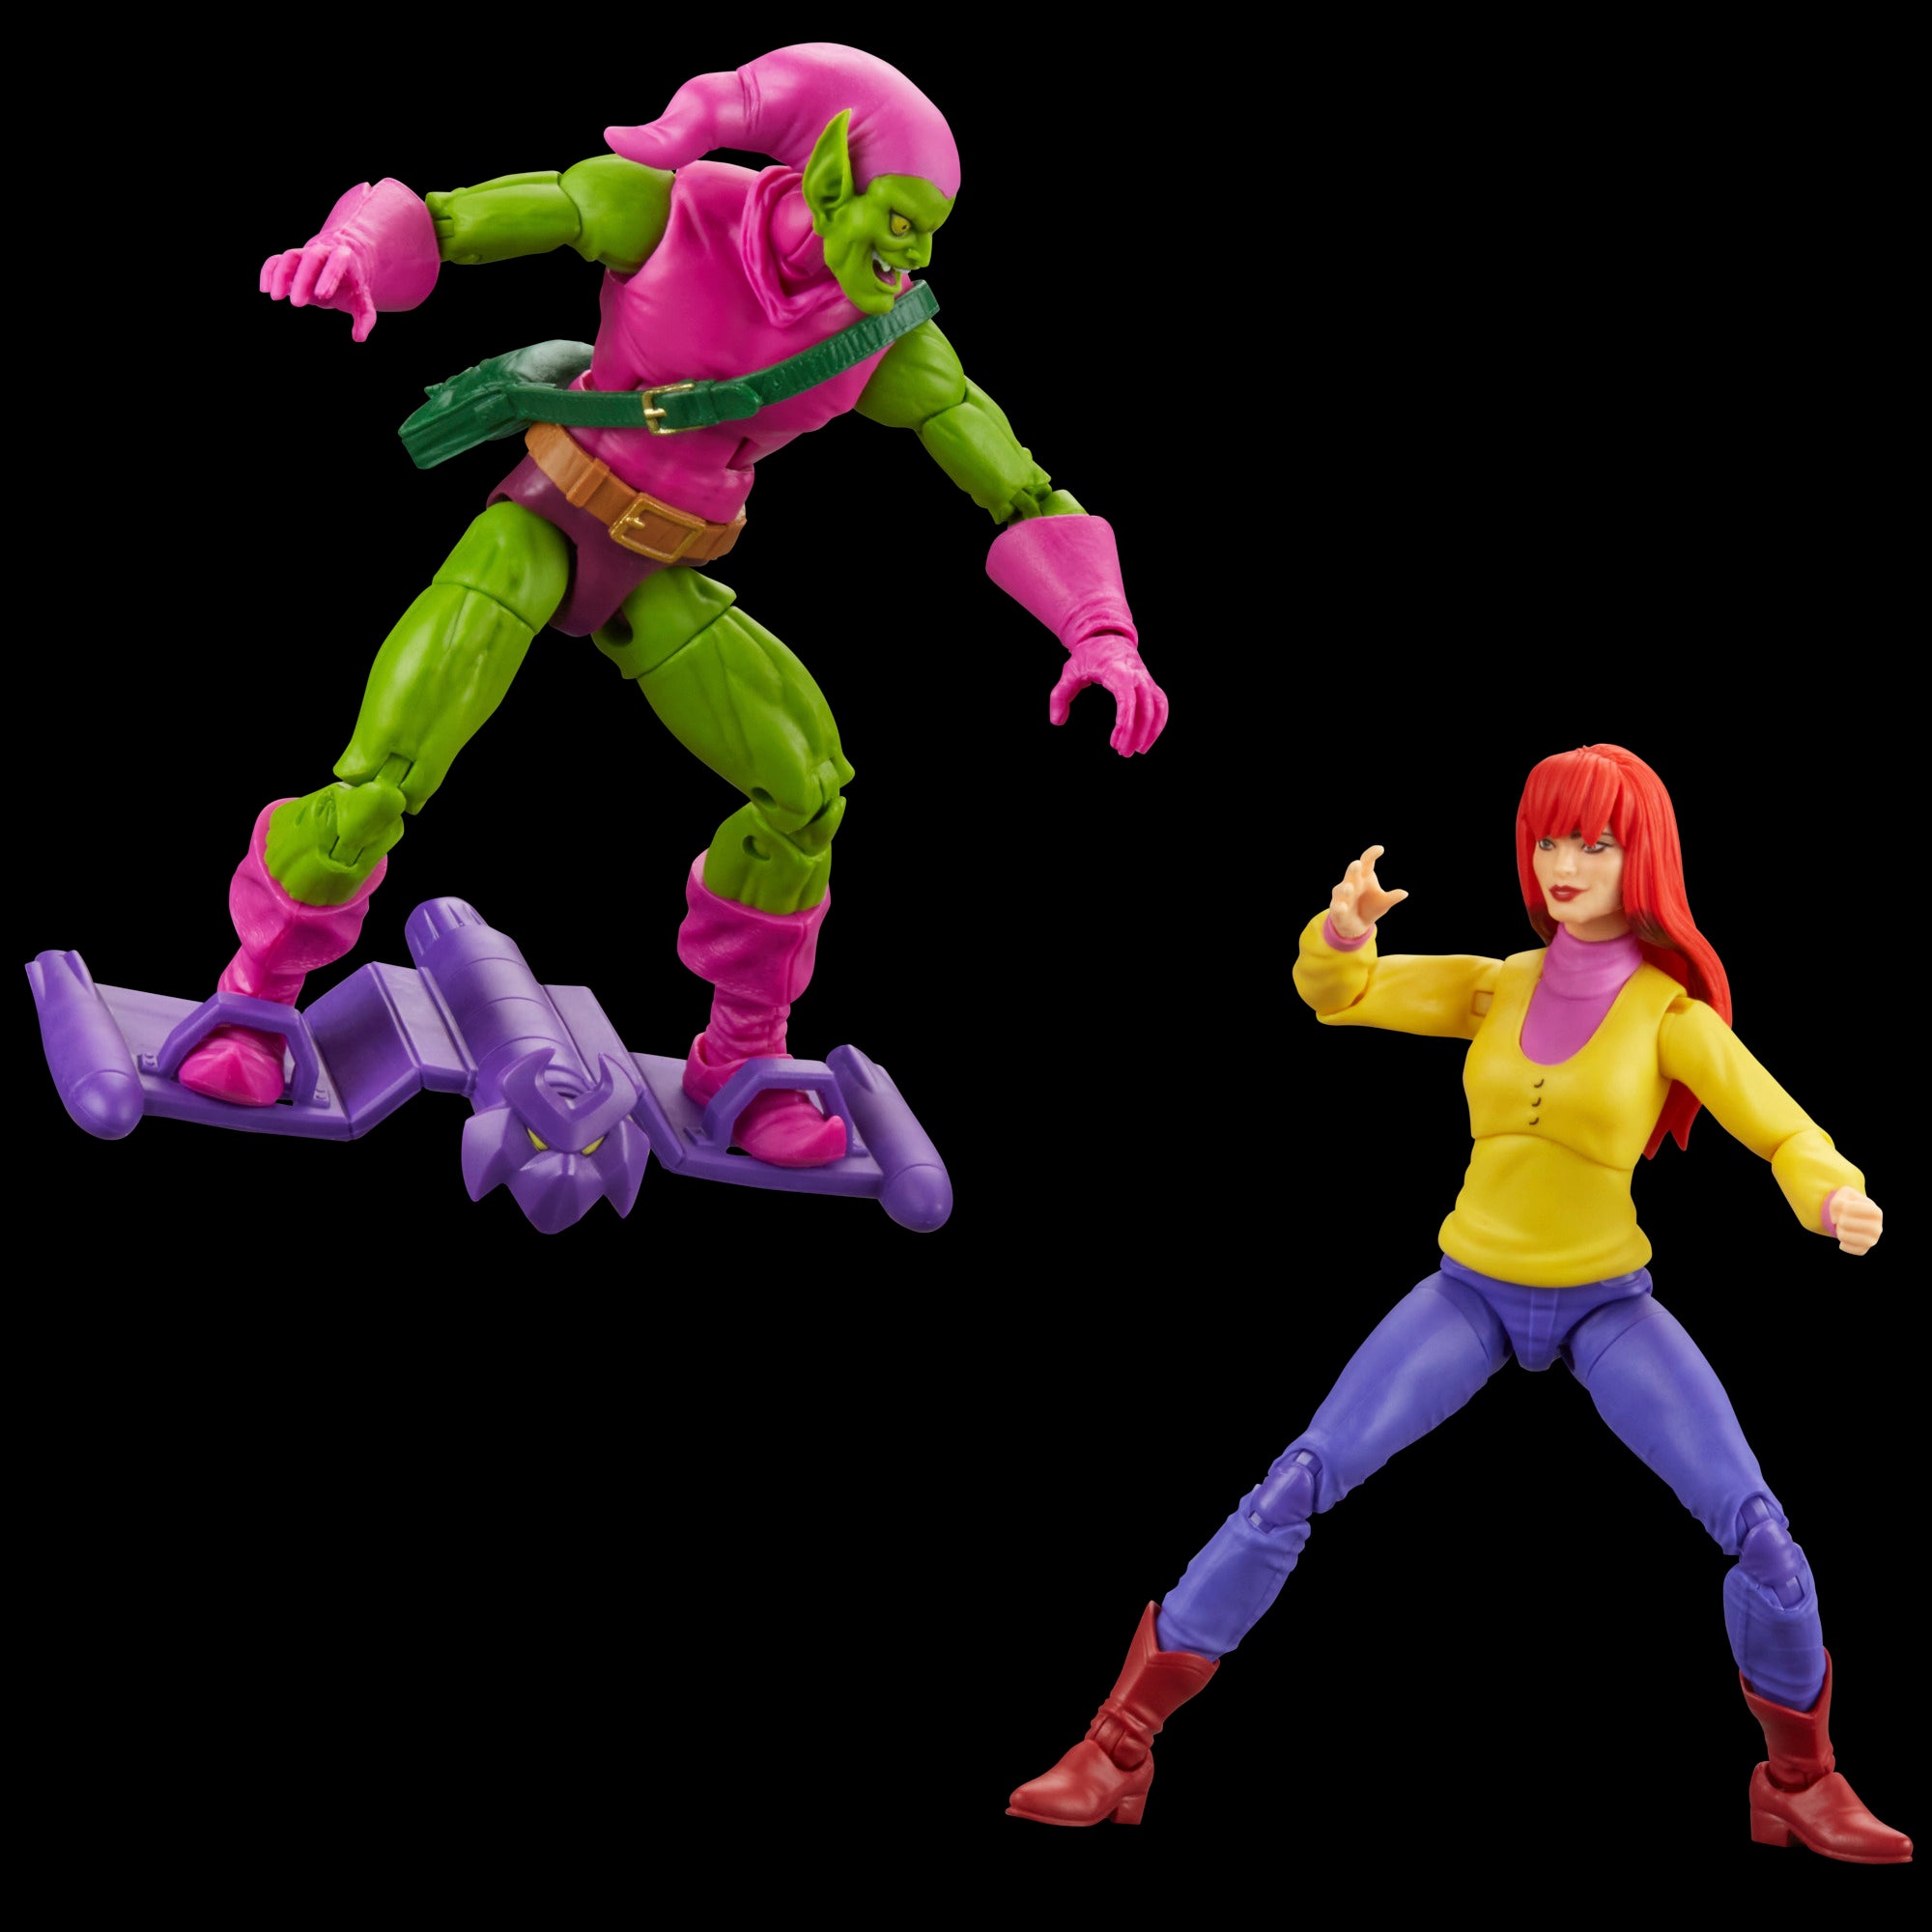 Marvel Legends Series Doctor Octopus & Aunt May Action Figure 2